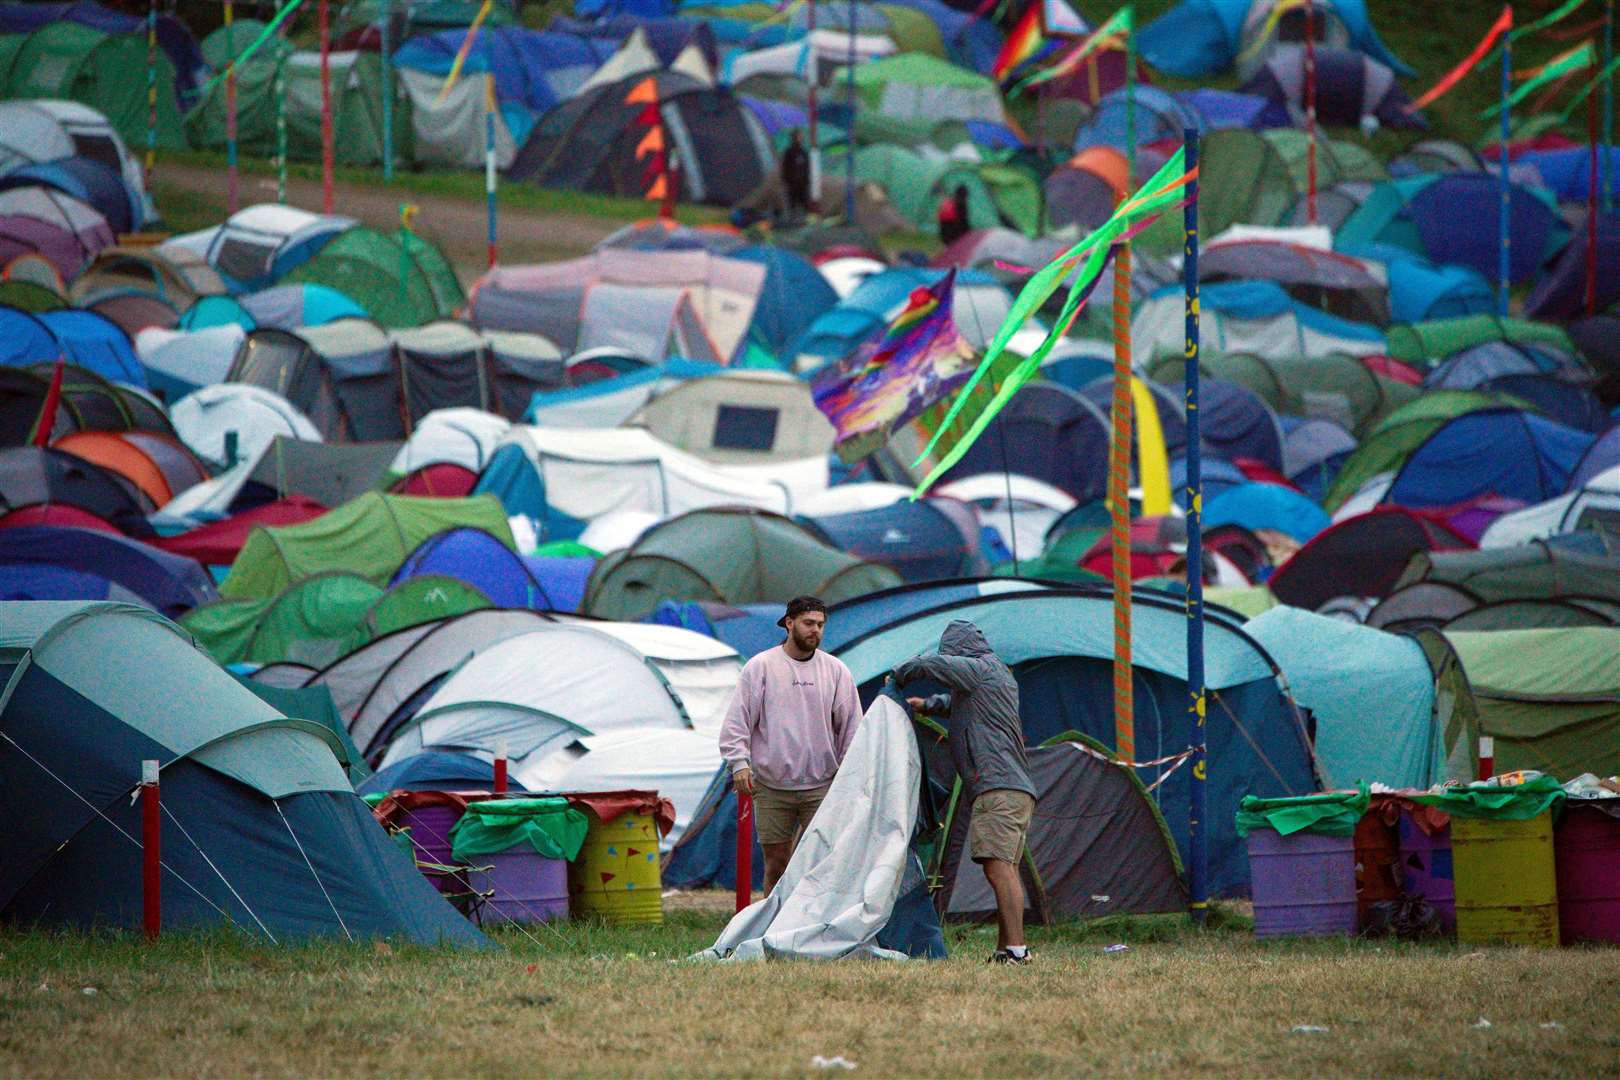 Festival-goers pack away a tent (Ben Birchall/PA)